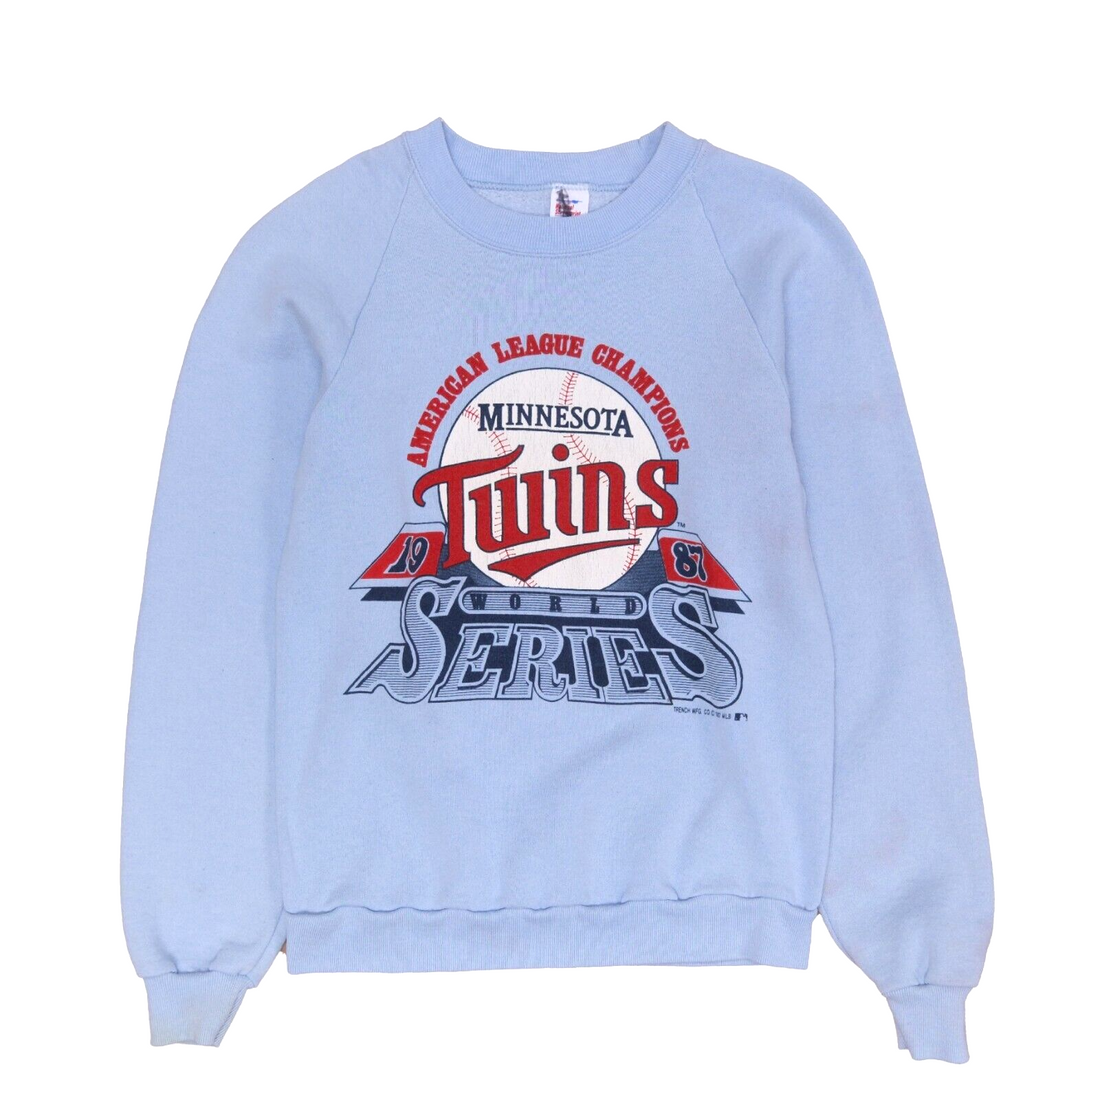 Vintage Minnesota Twins AL Champions Sweatshirt Size Small Blue 1987 80s MLB